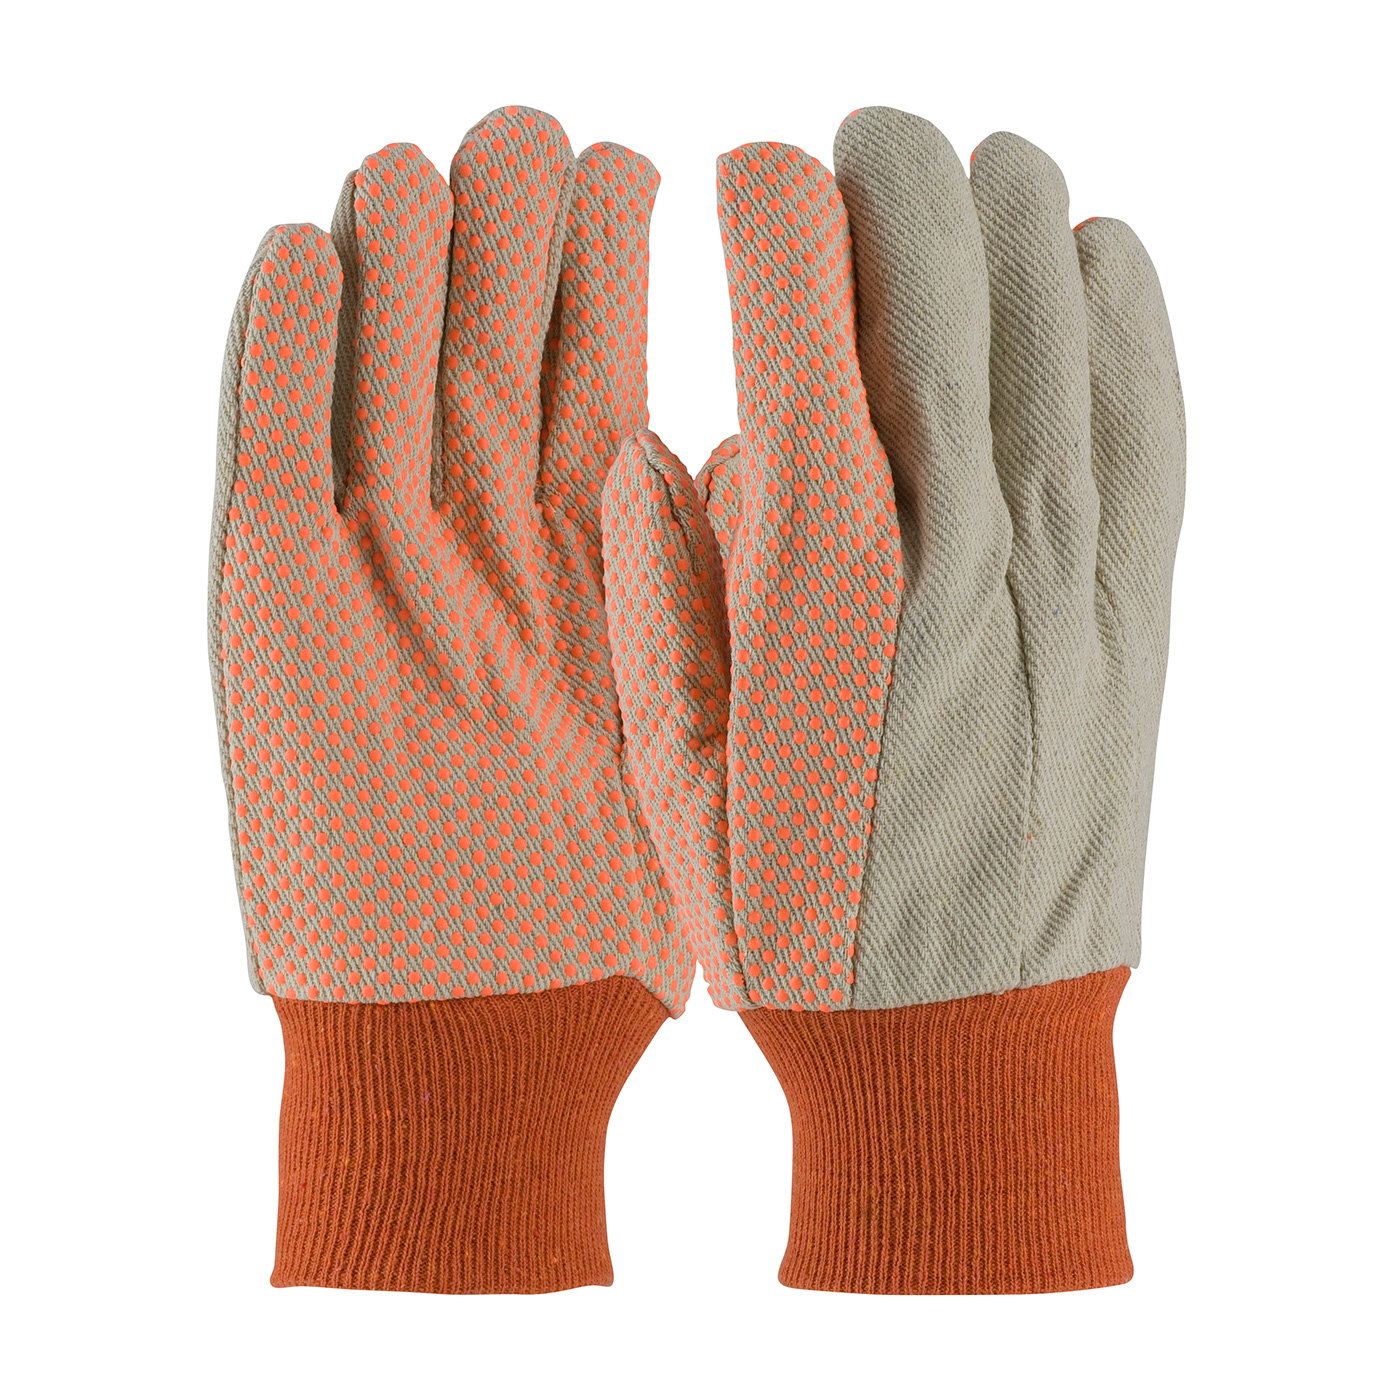 PIP Men's Premium Grade Natural/Orange 10 oz. PVC Dot Grip Cotton Canvas Gloves